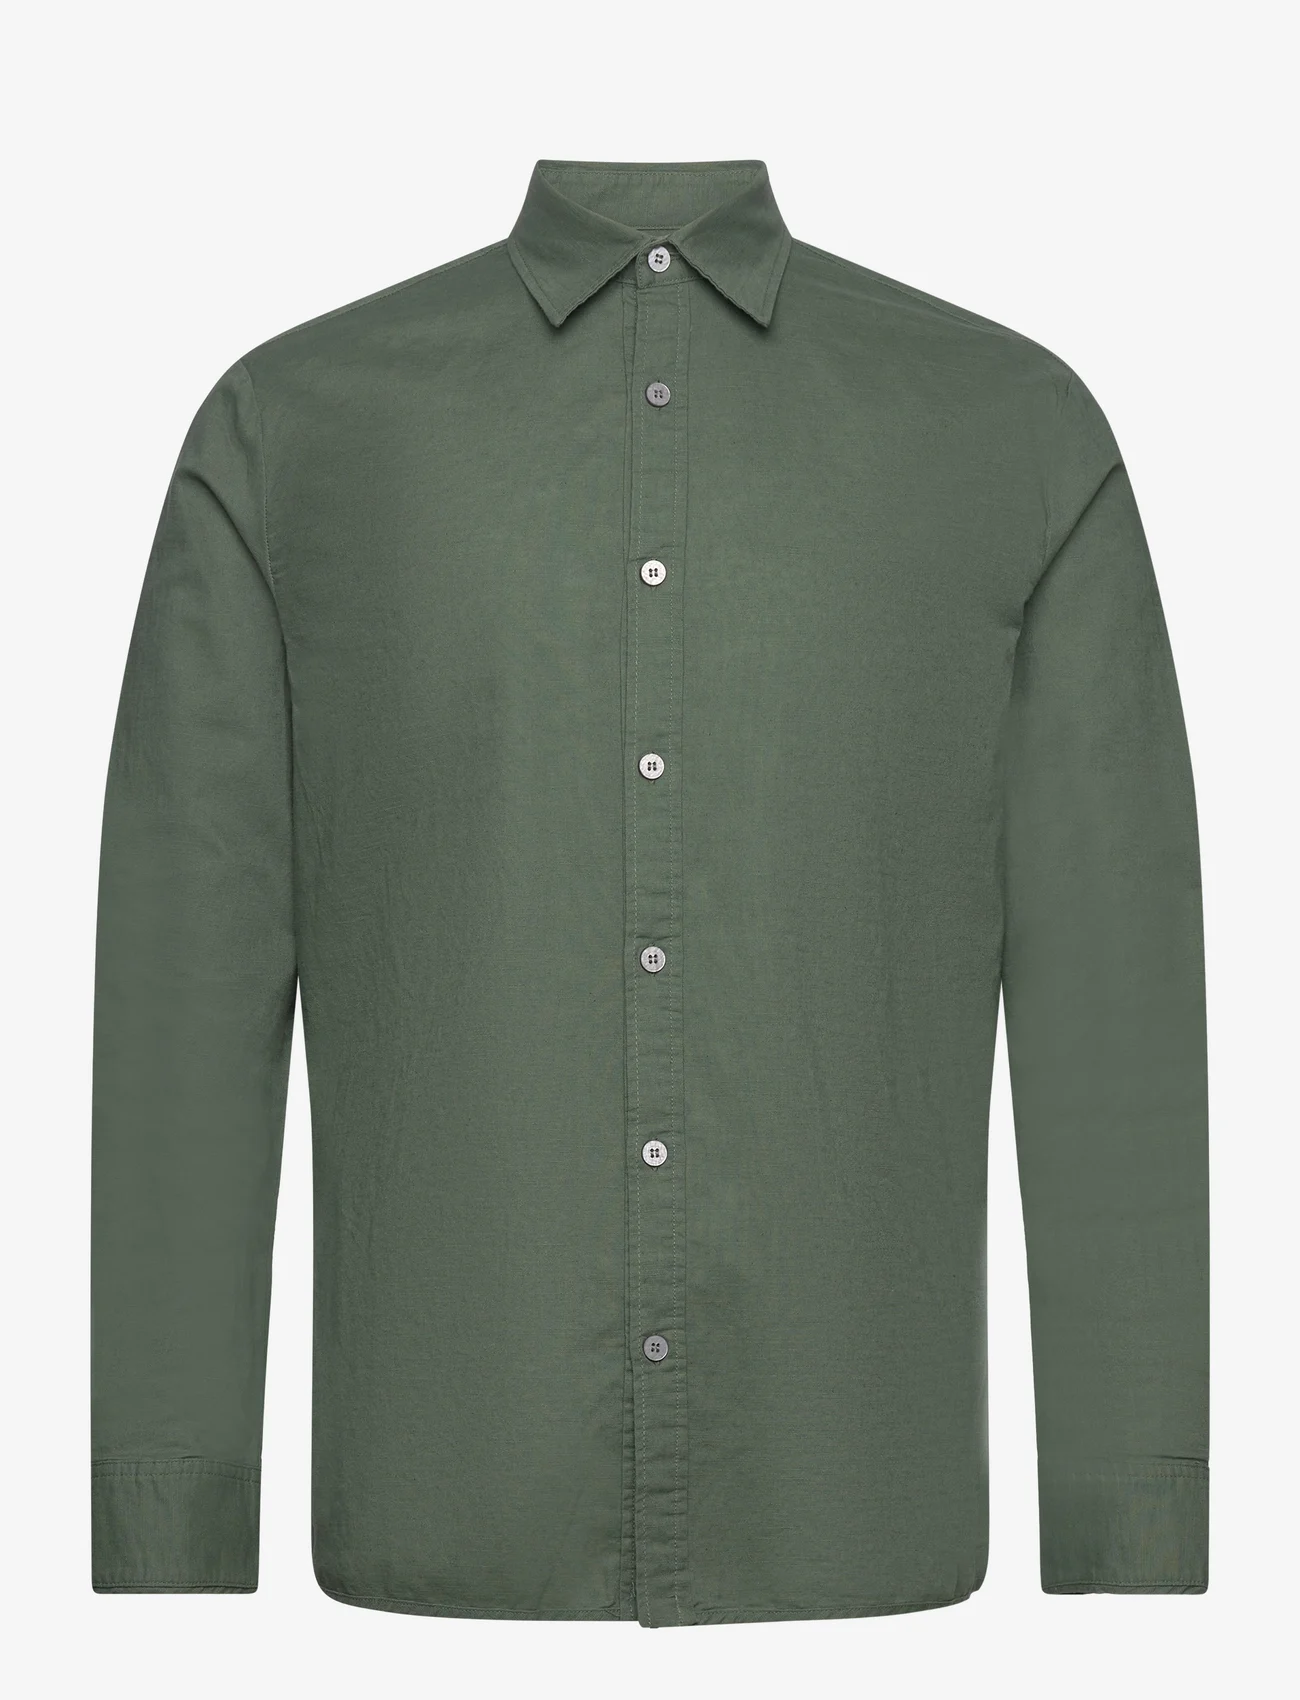 Bruuns Bazaar - LinowBBGiil LS shirt - casual shirts - frosty spruce - 0